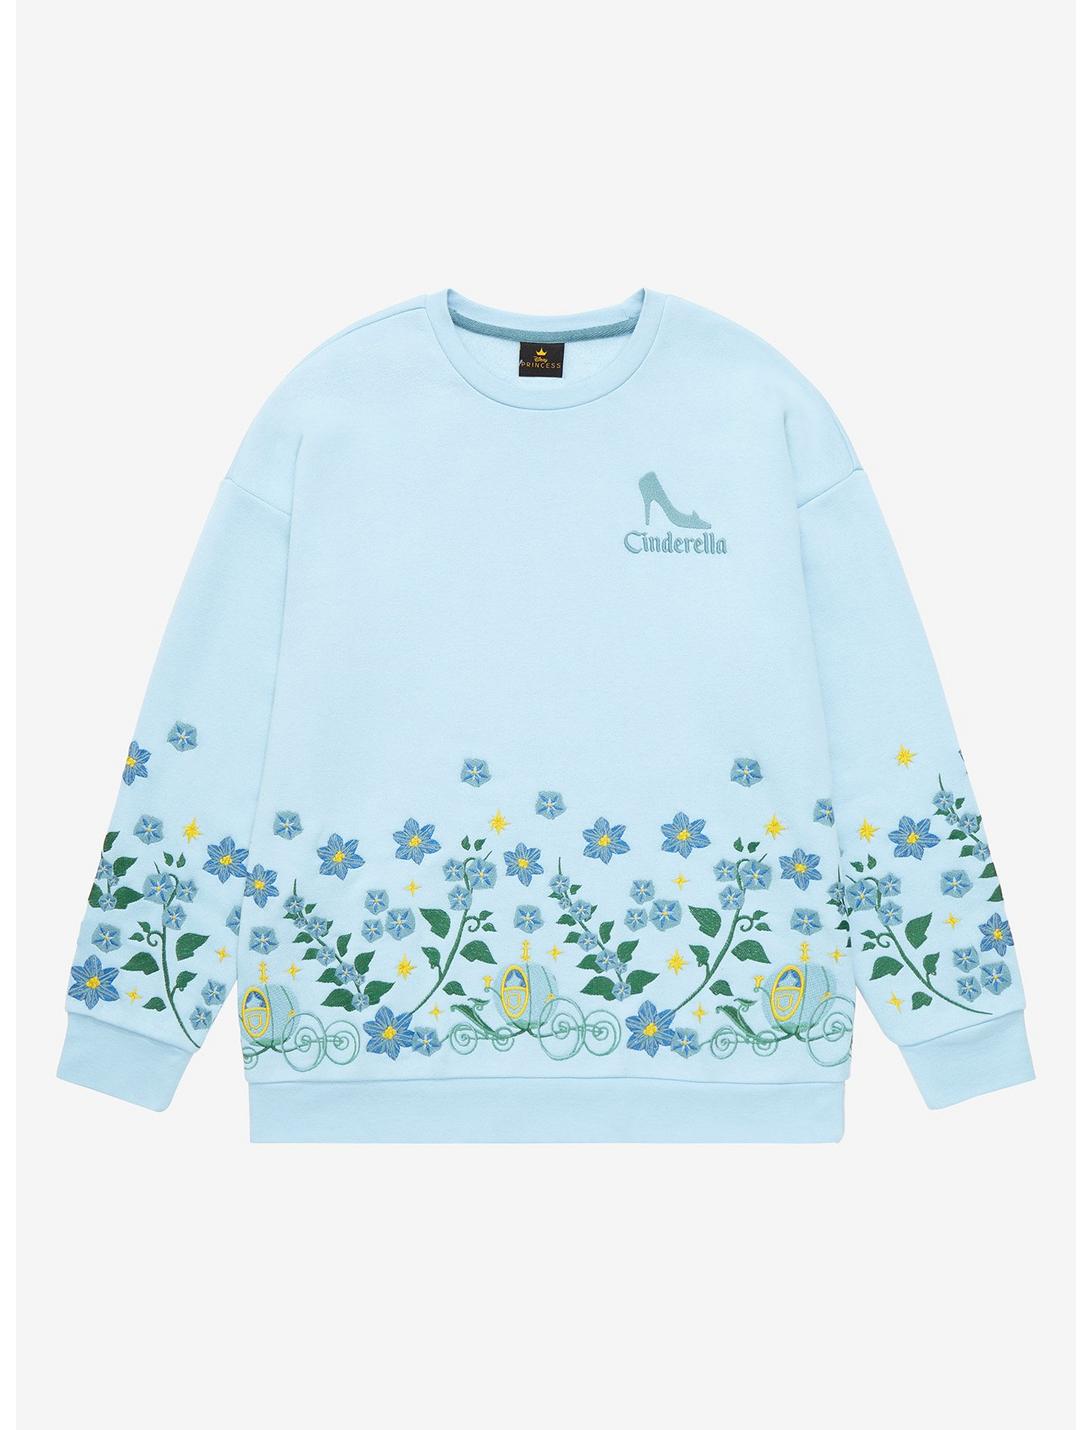 Disney Princess Cinderella Embroidered Floral Sweatshirt, LIGHT BLUE, hi-res